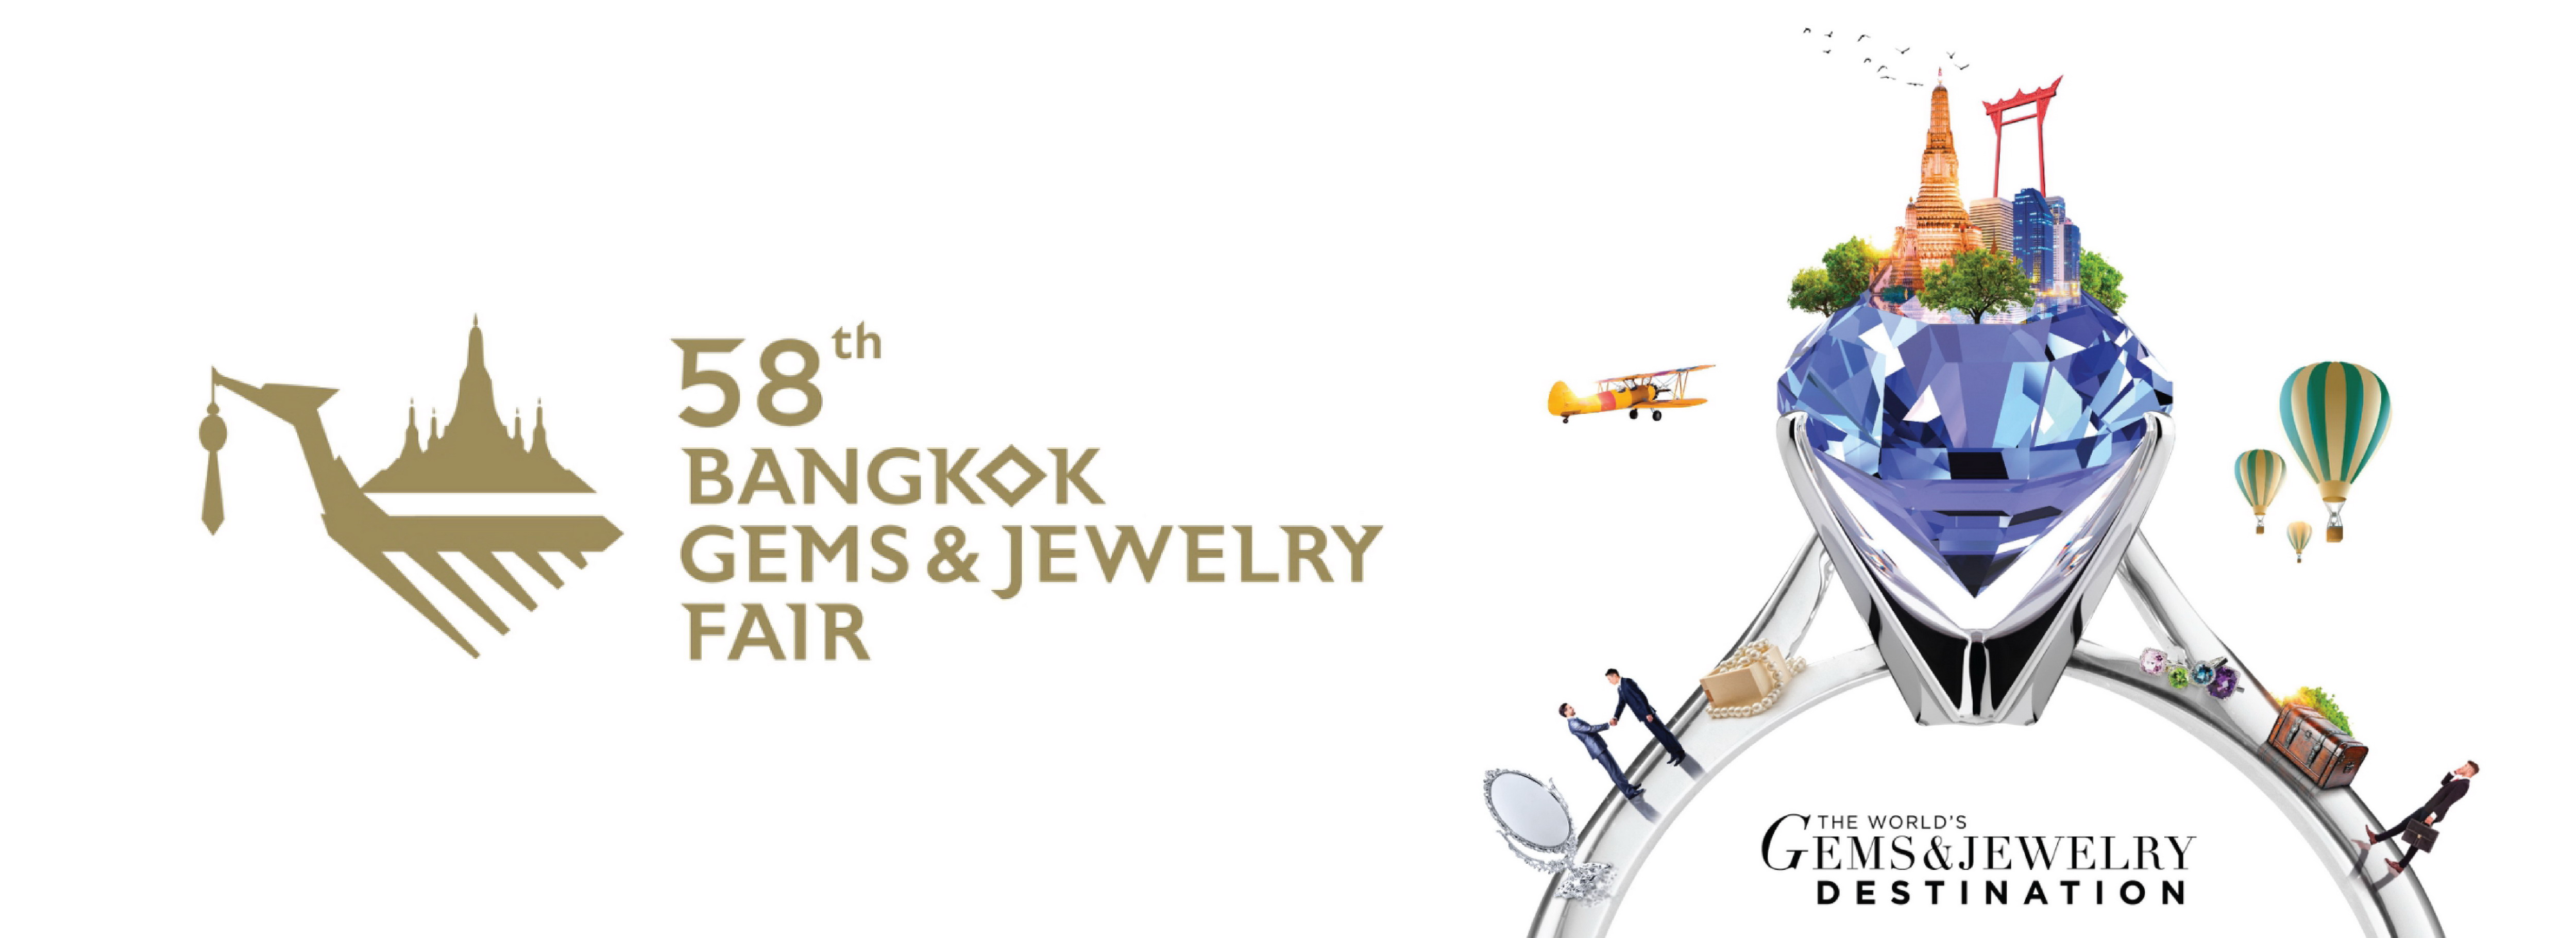 The 58th Bangkok Gems & Jewelry Fair 2016